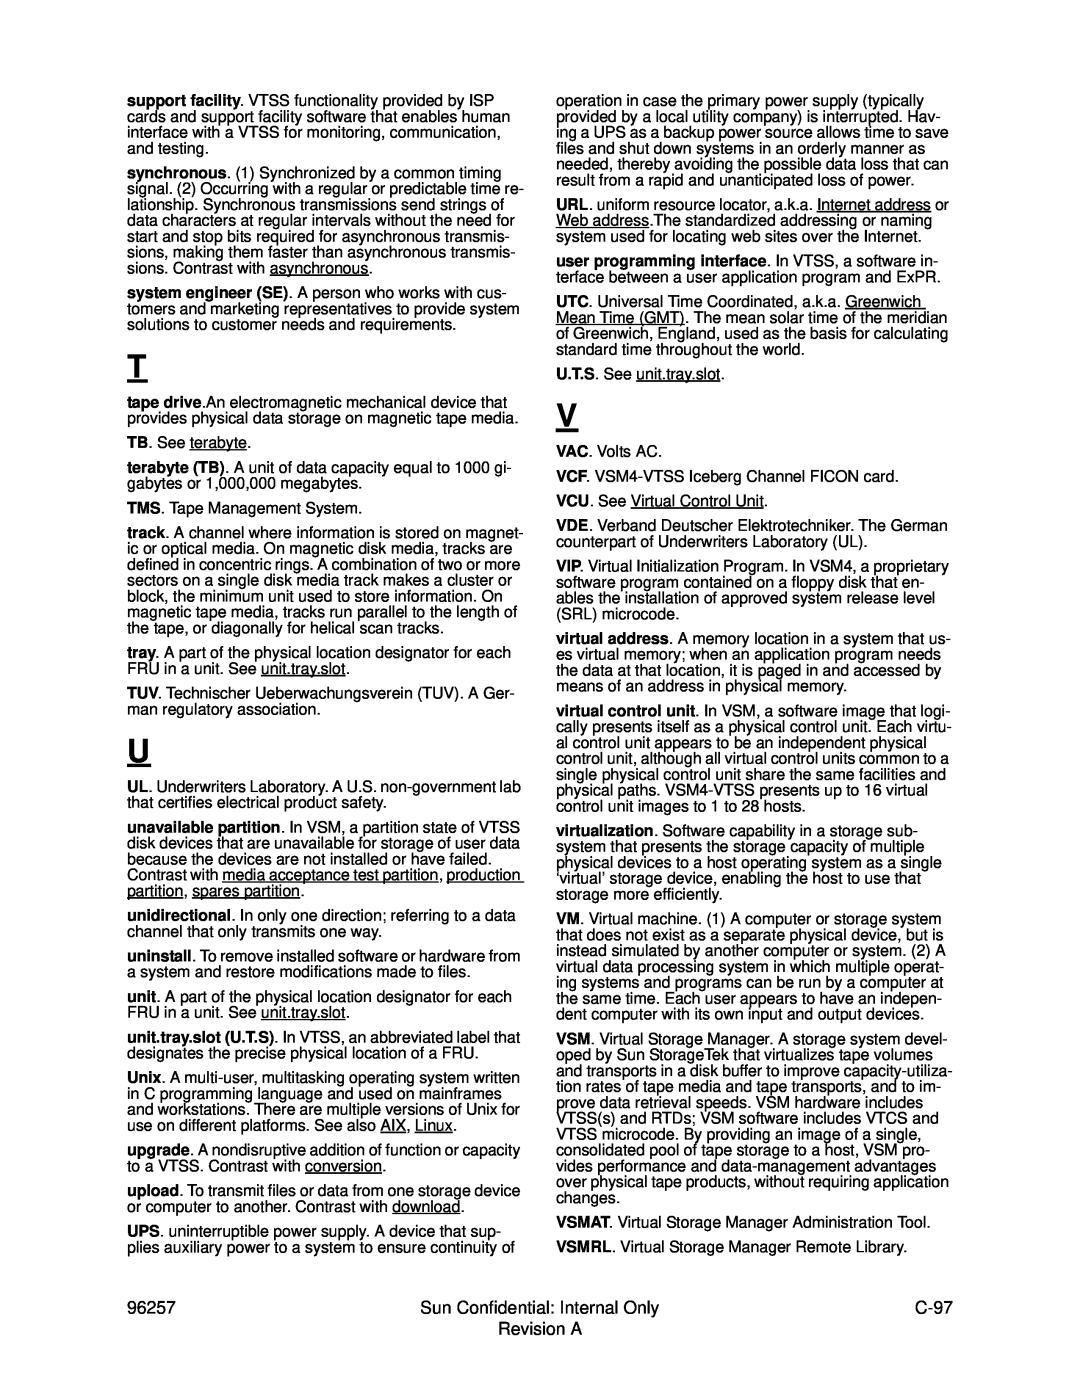 Sun Microsystems 96257 manual 